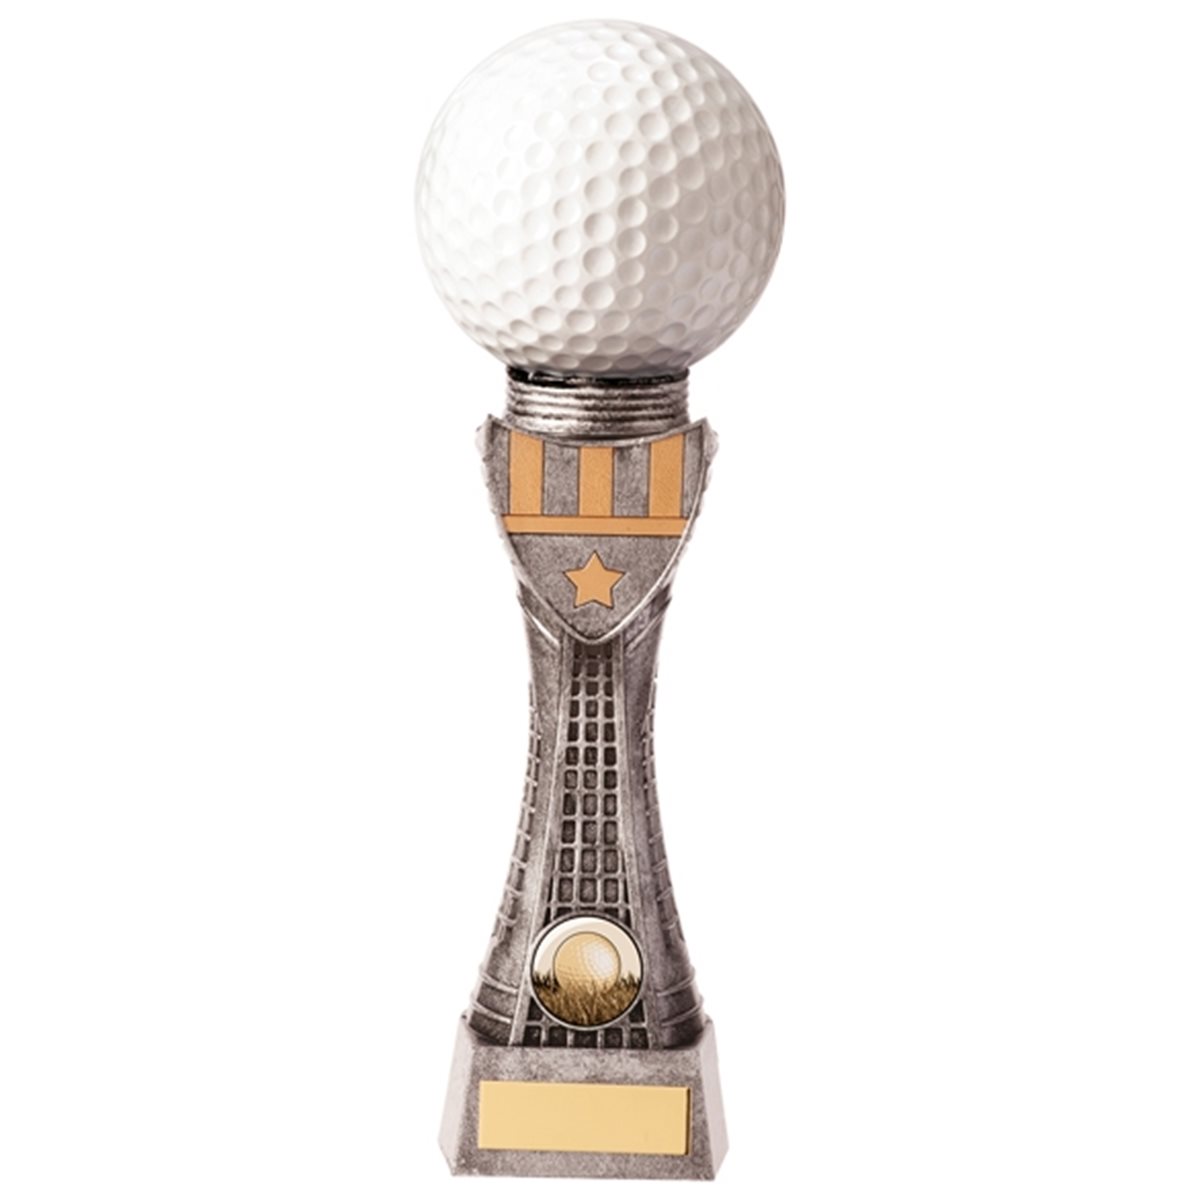 Valiant Golf Ball Trophy PM20241